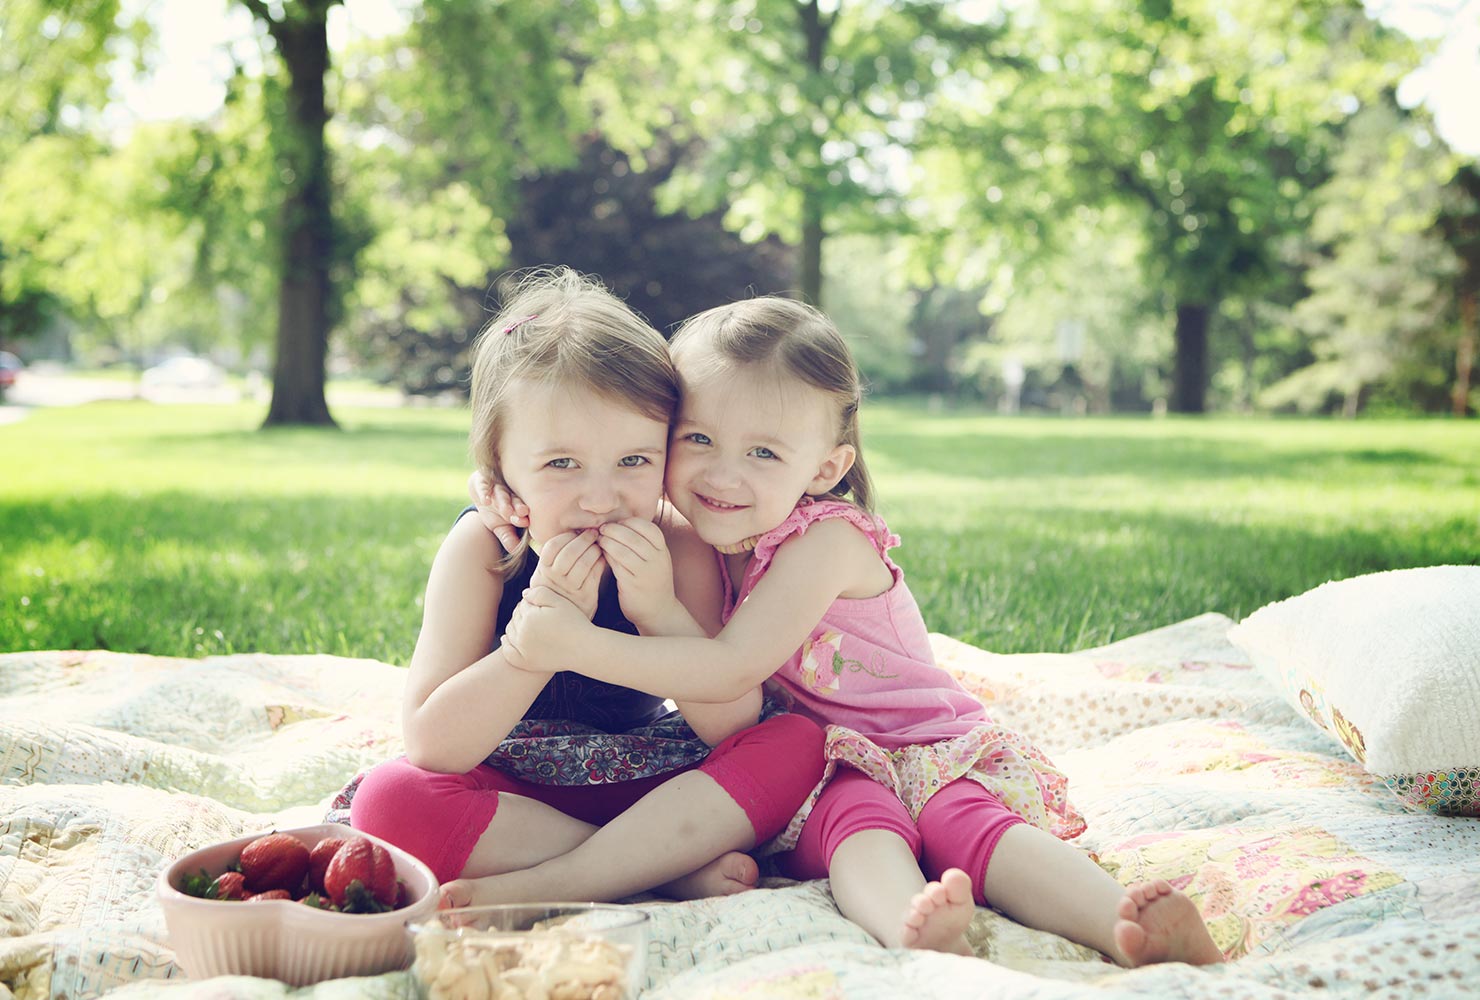 sibling photo ideas girls picnic